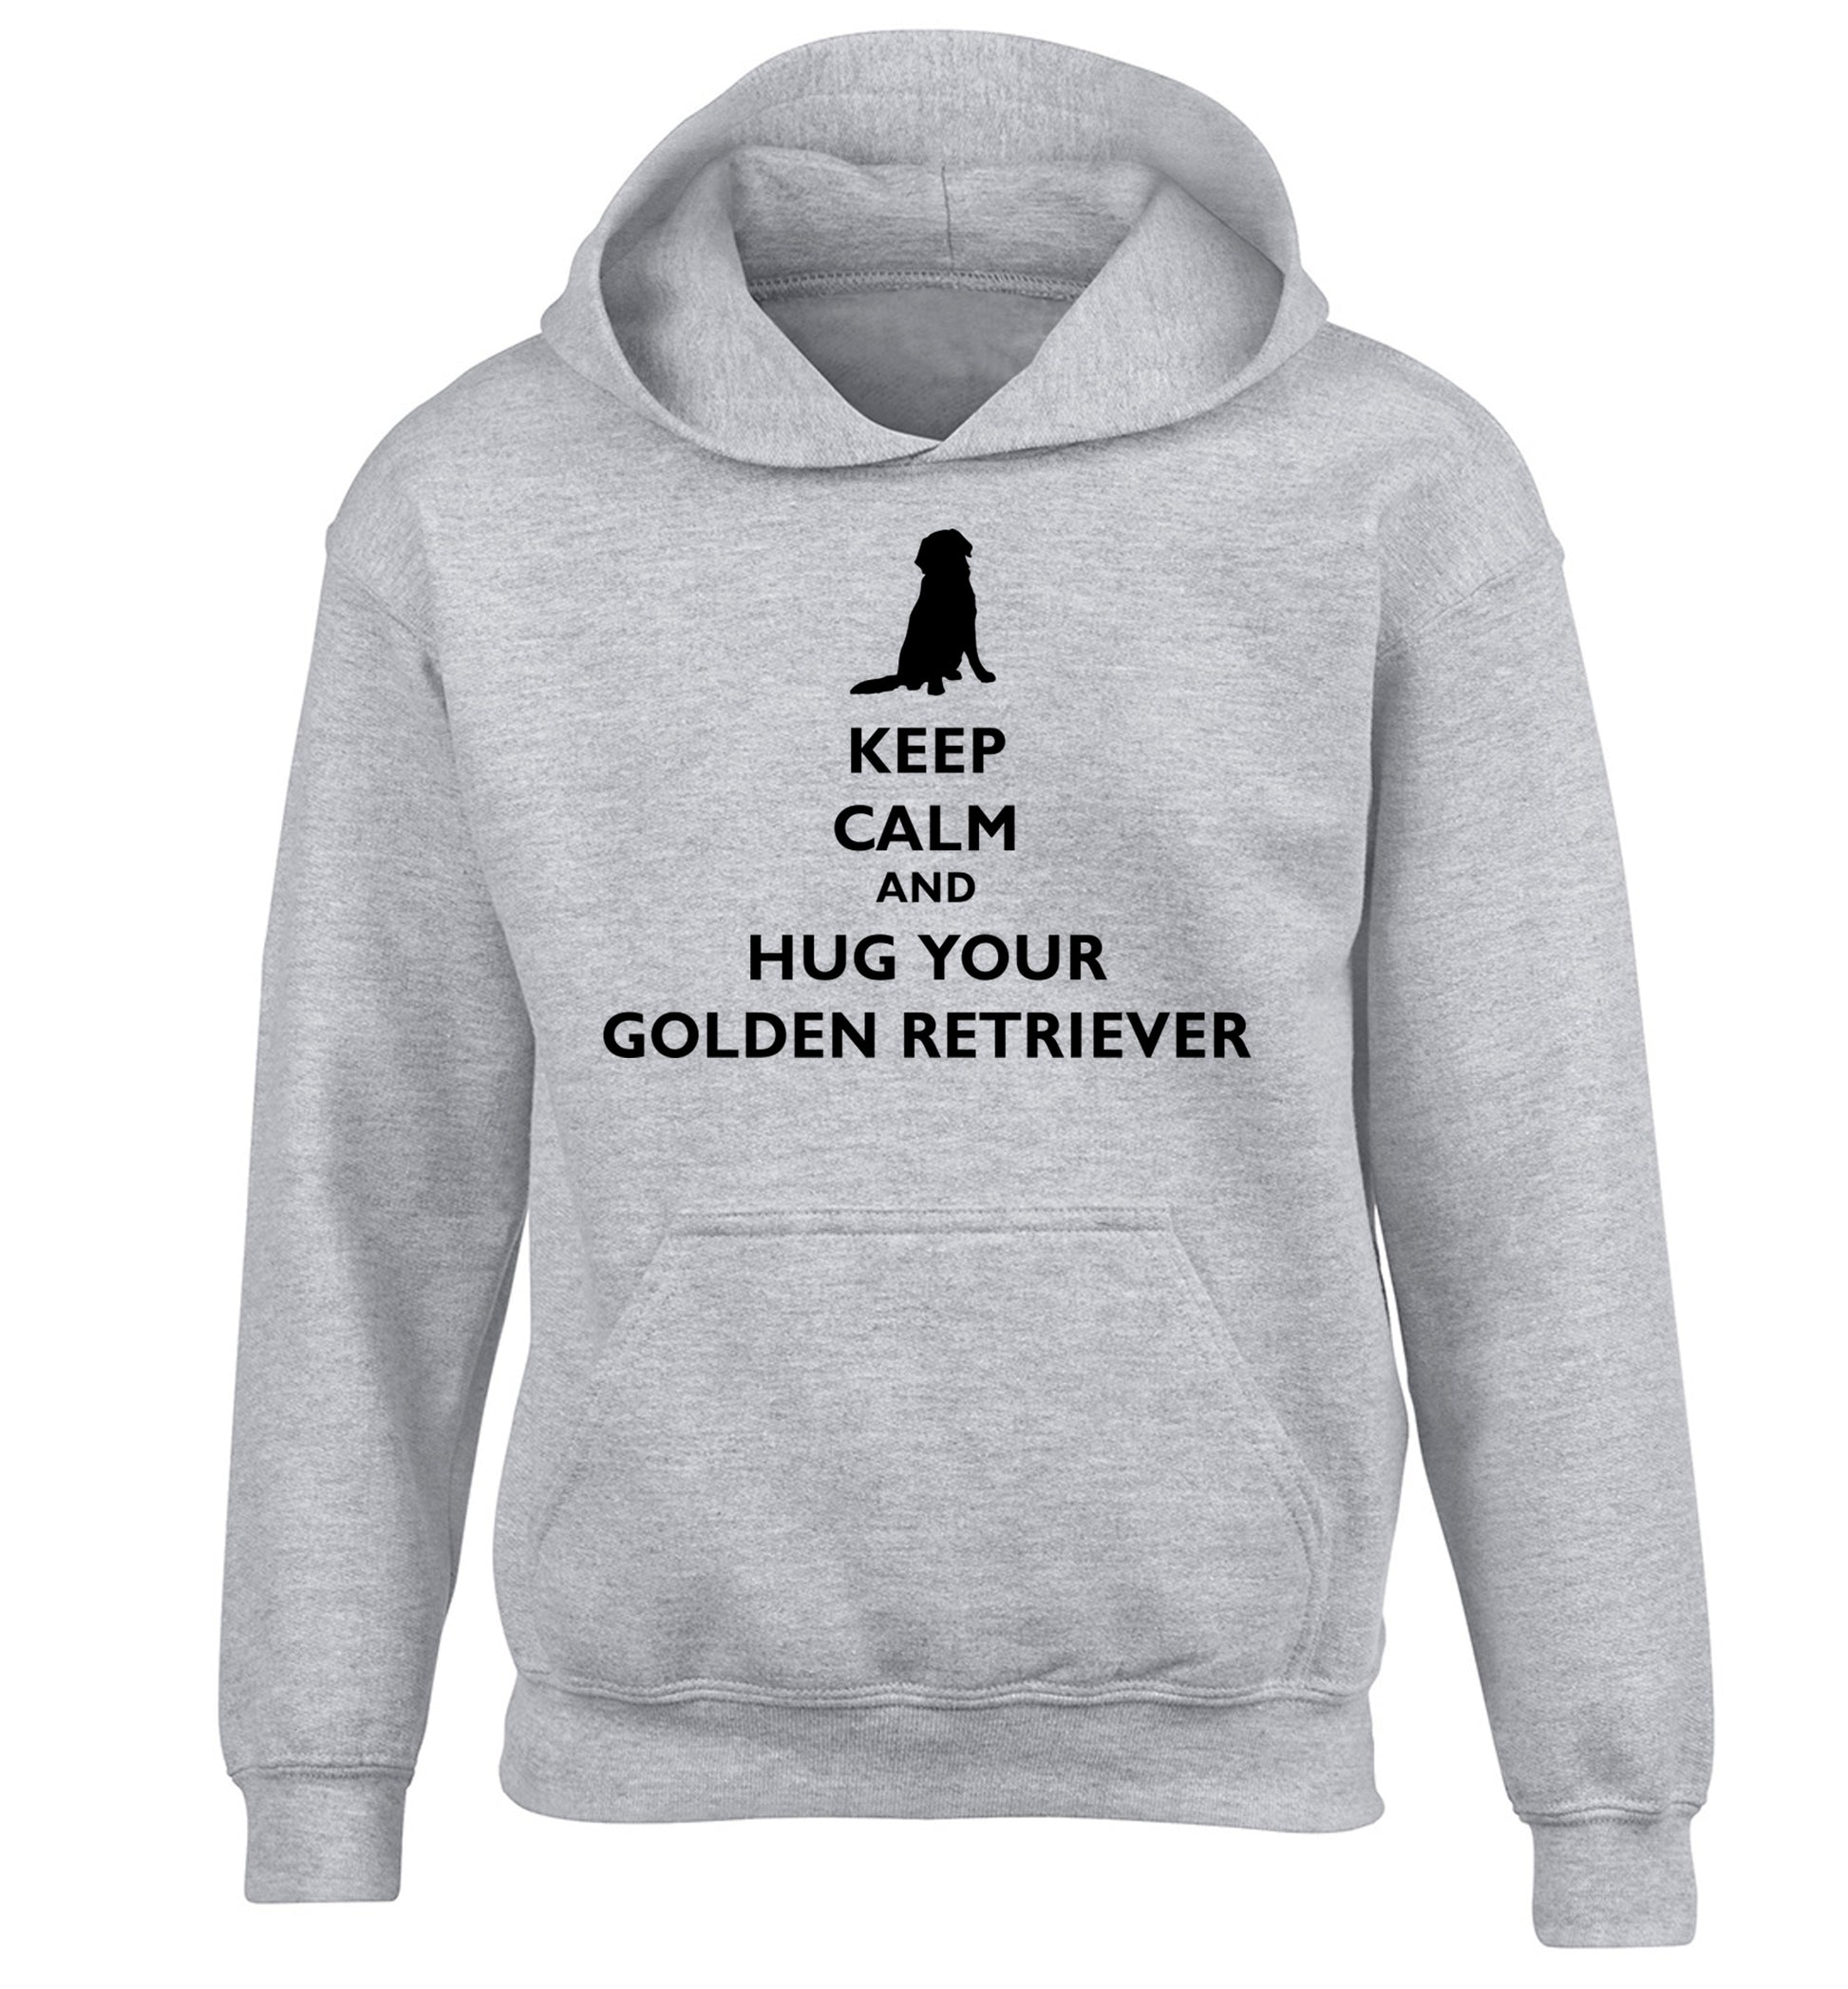 Keep calm and hug your golden retriever children's grey hoodie 12-13 Years